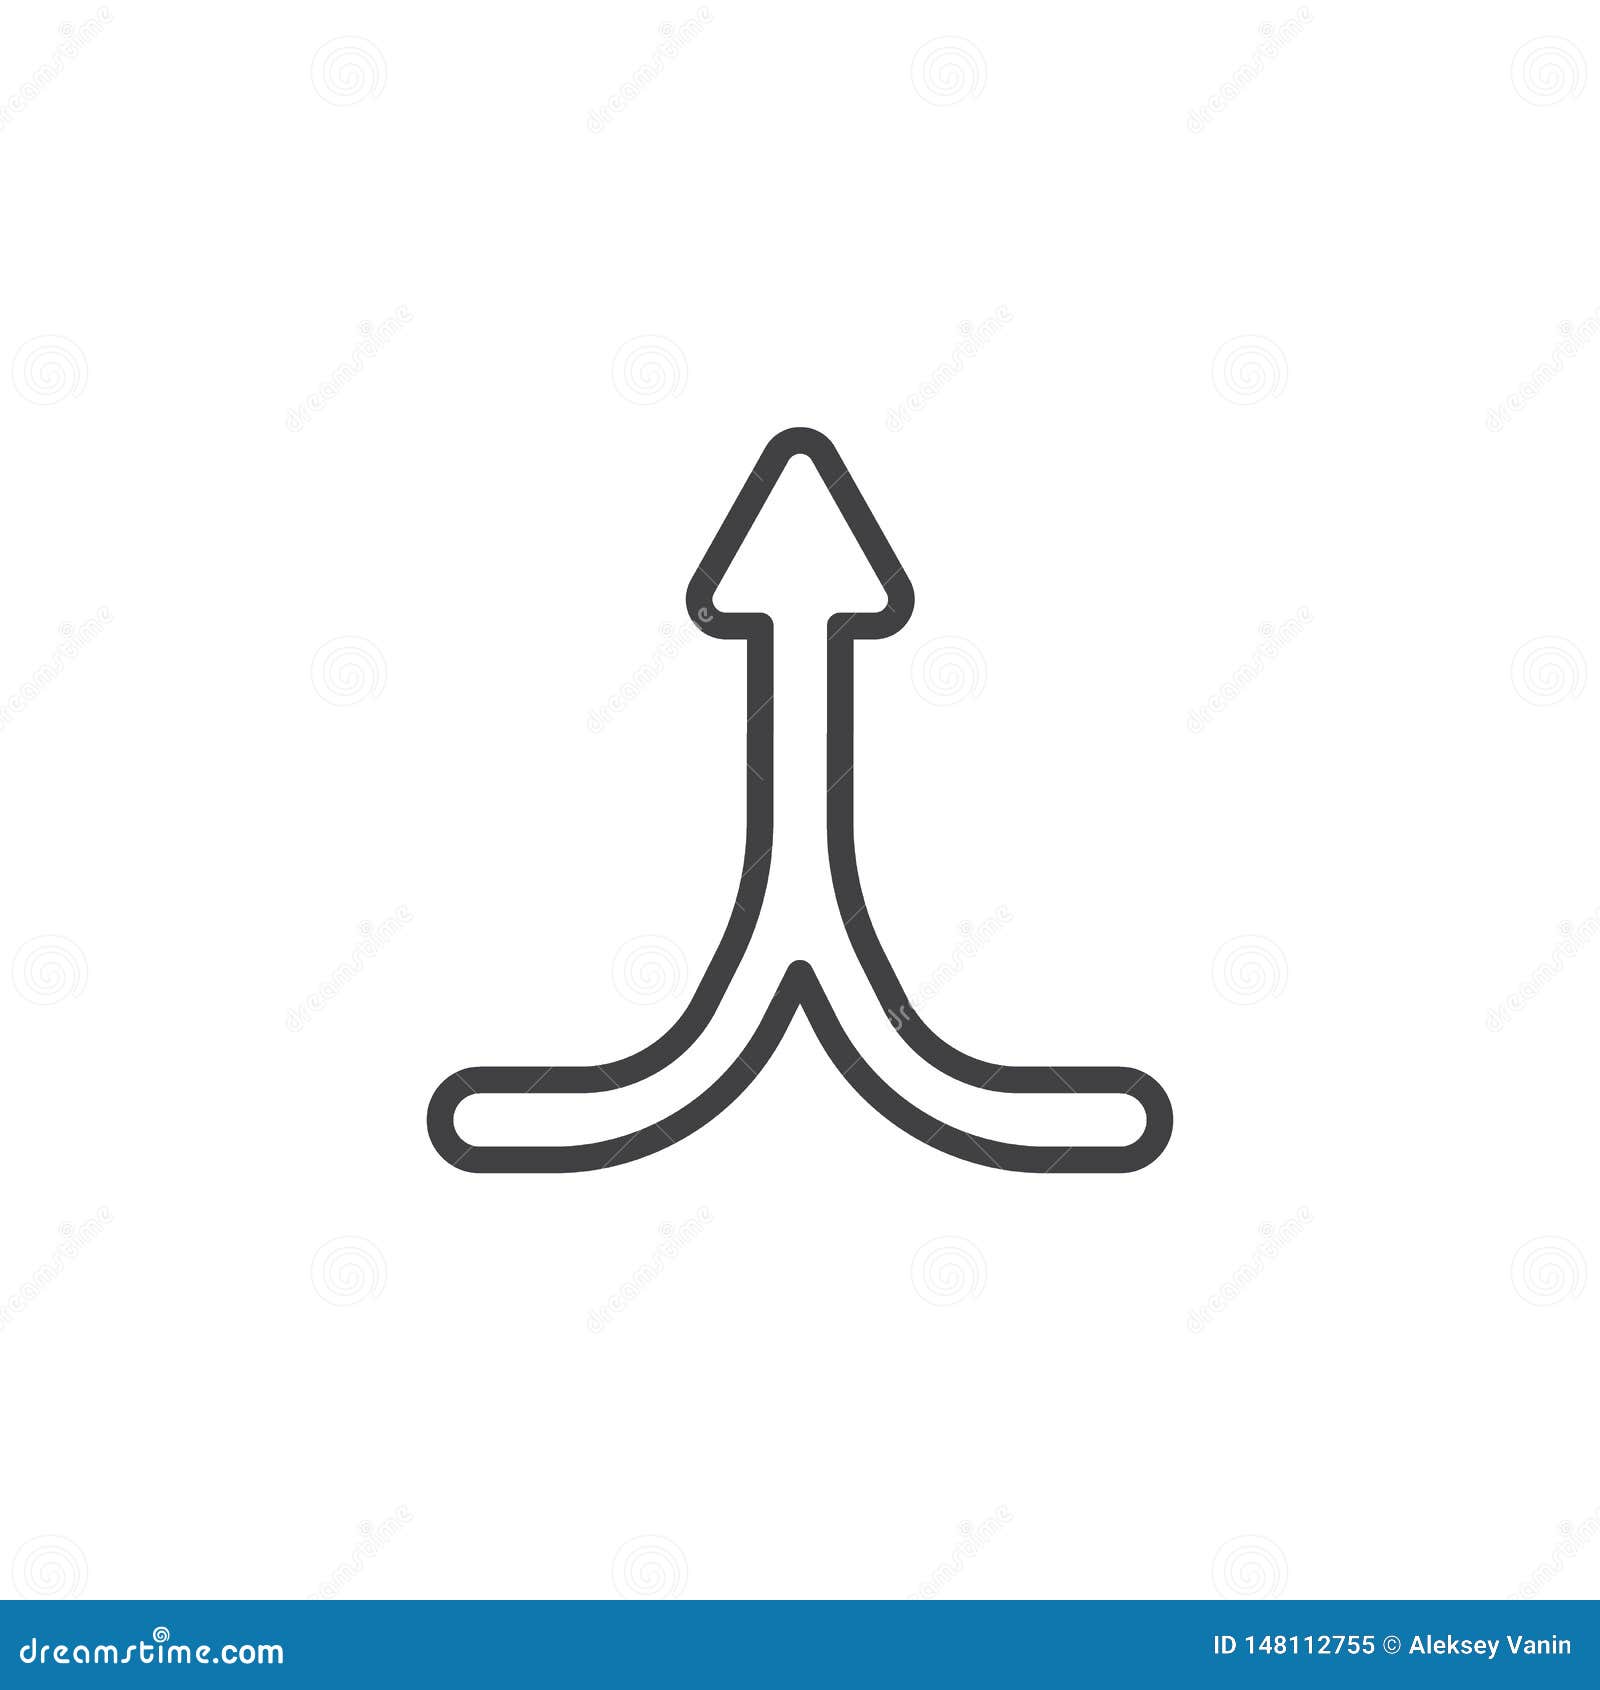 merged arrow line icon